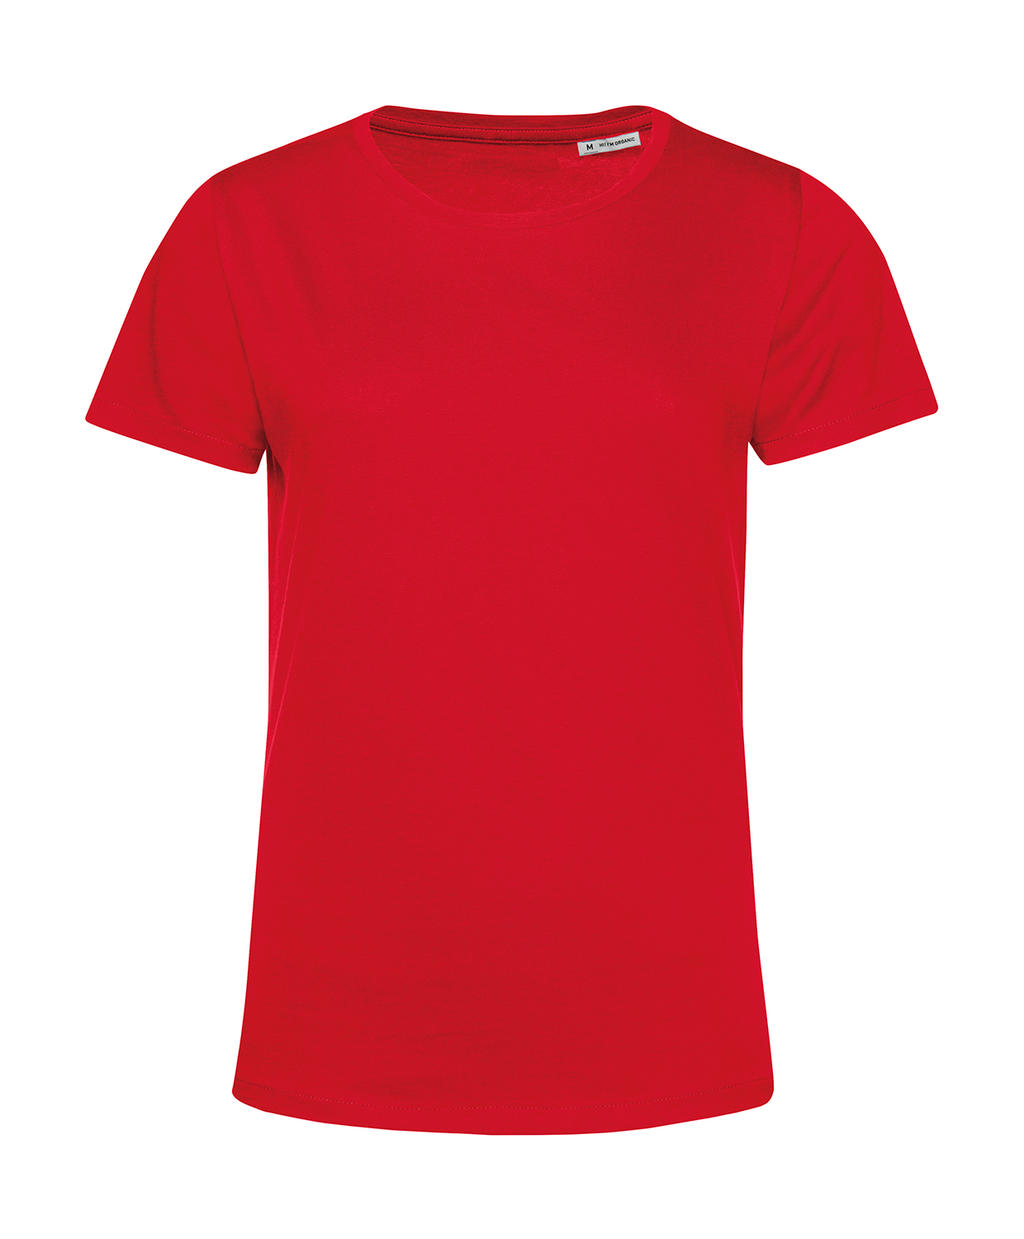 Tričko dámské BC Organic Inspire E150 - červené, XL